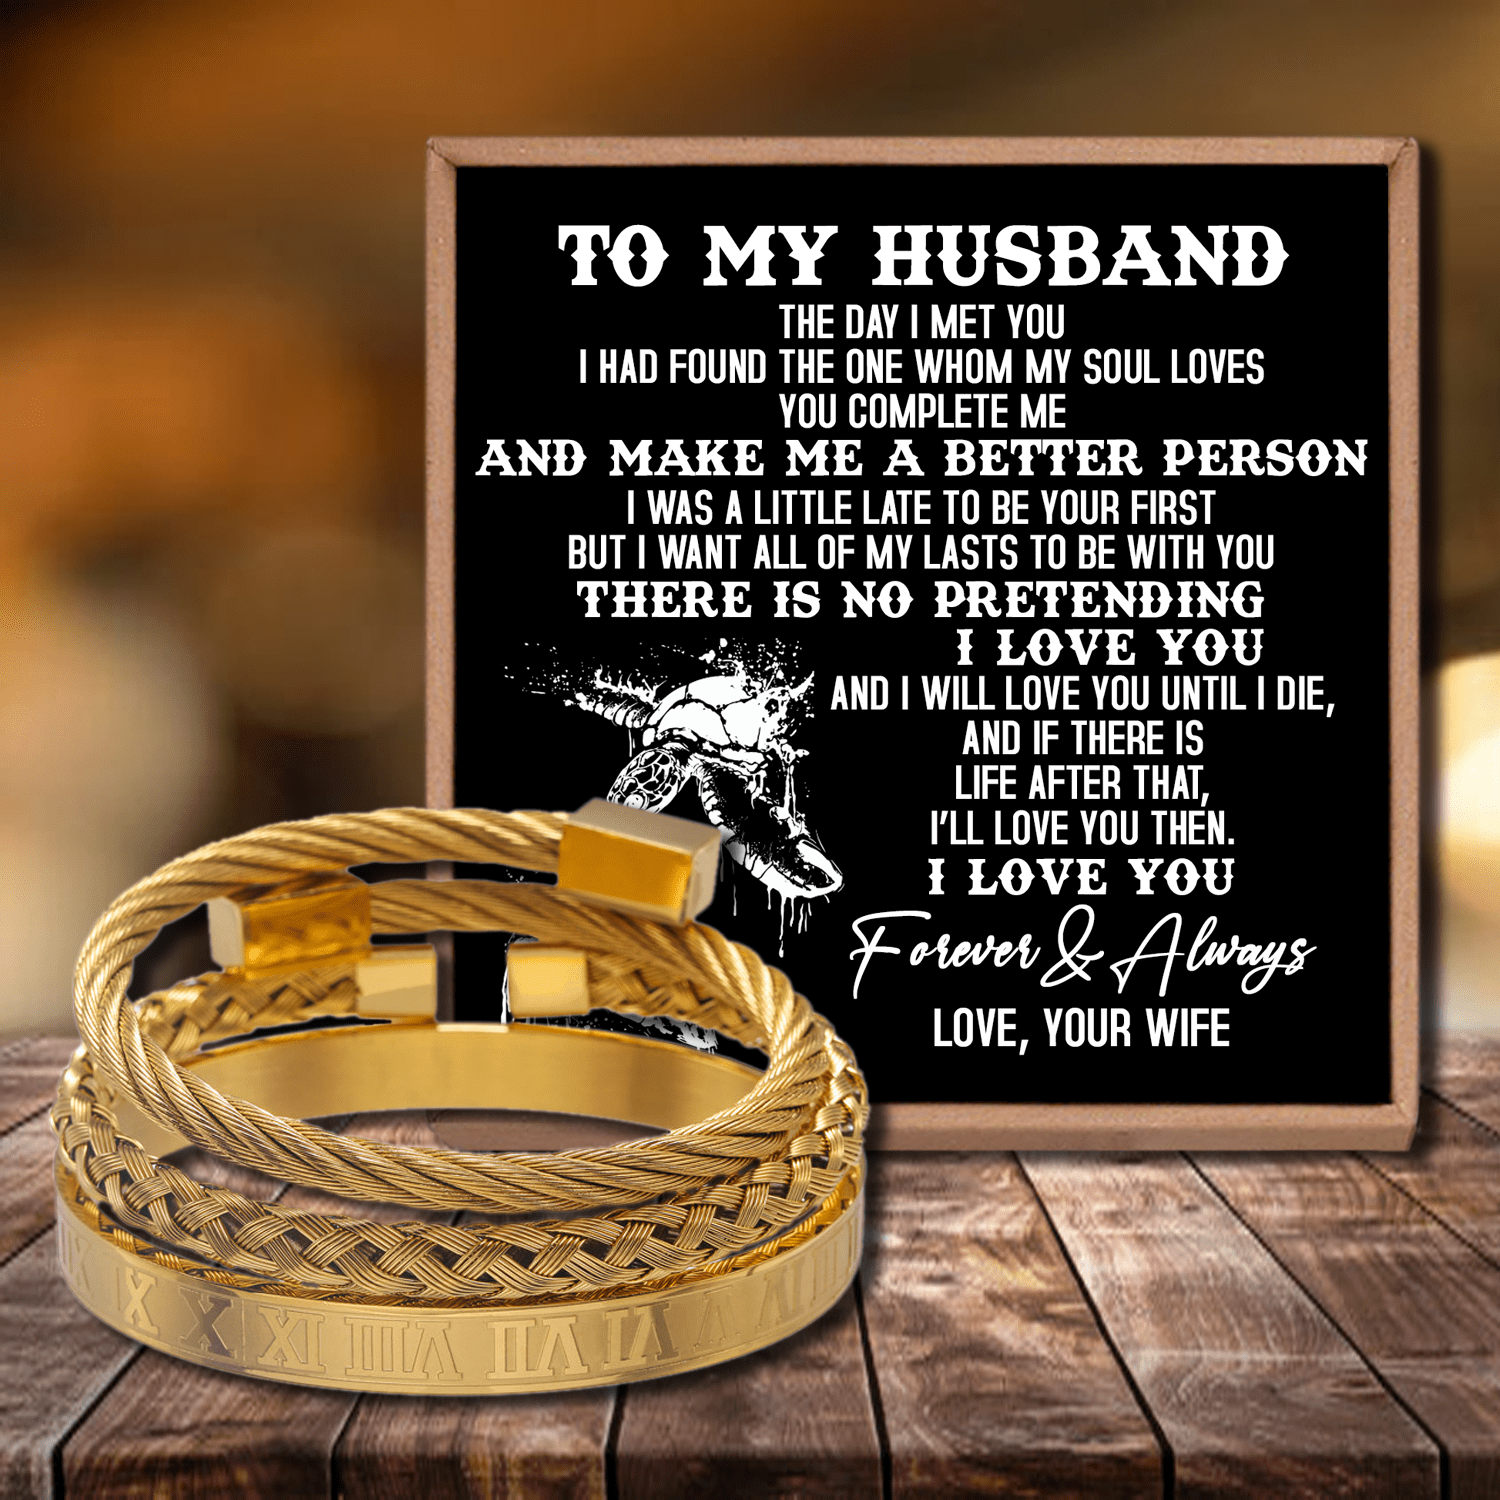 Bracelets To My Husband - I Love You Forever Roman Numeral Bracelet Set Gold GiveMe-Gifts